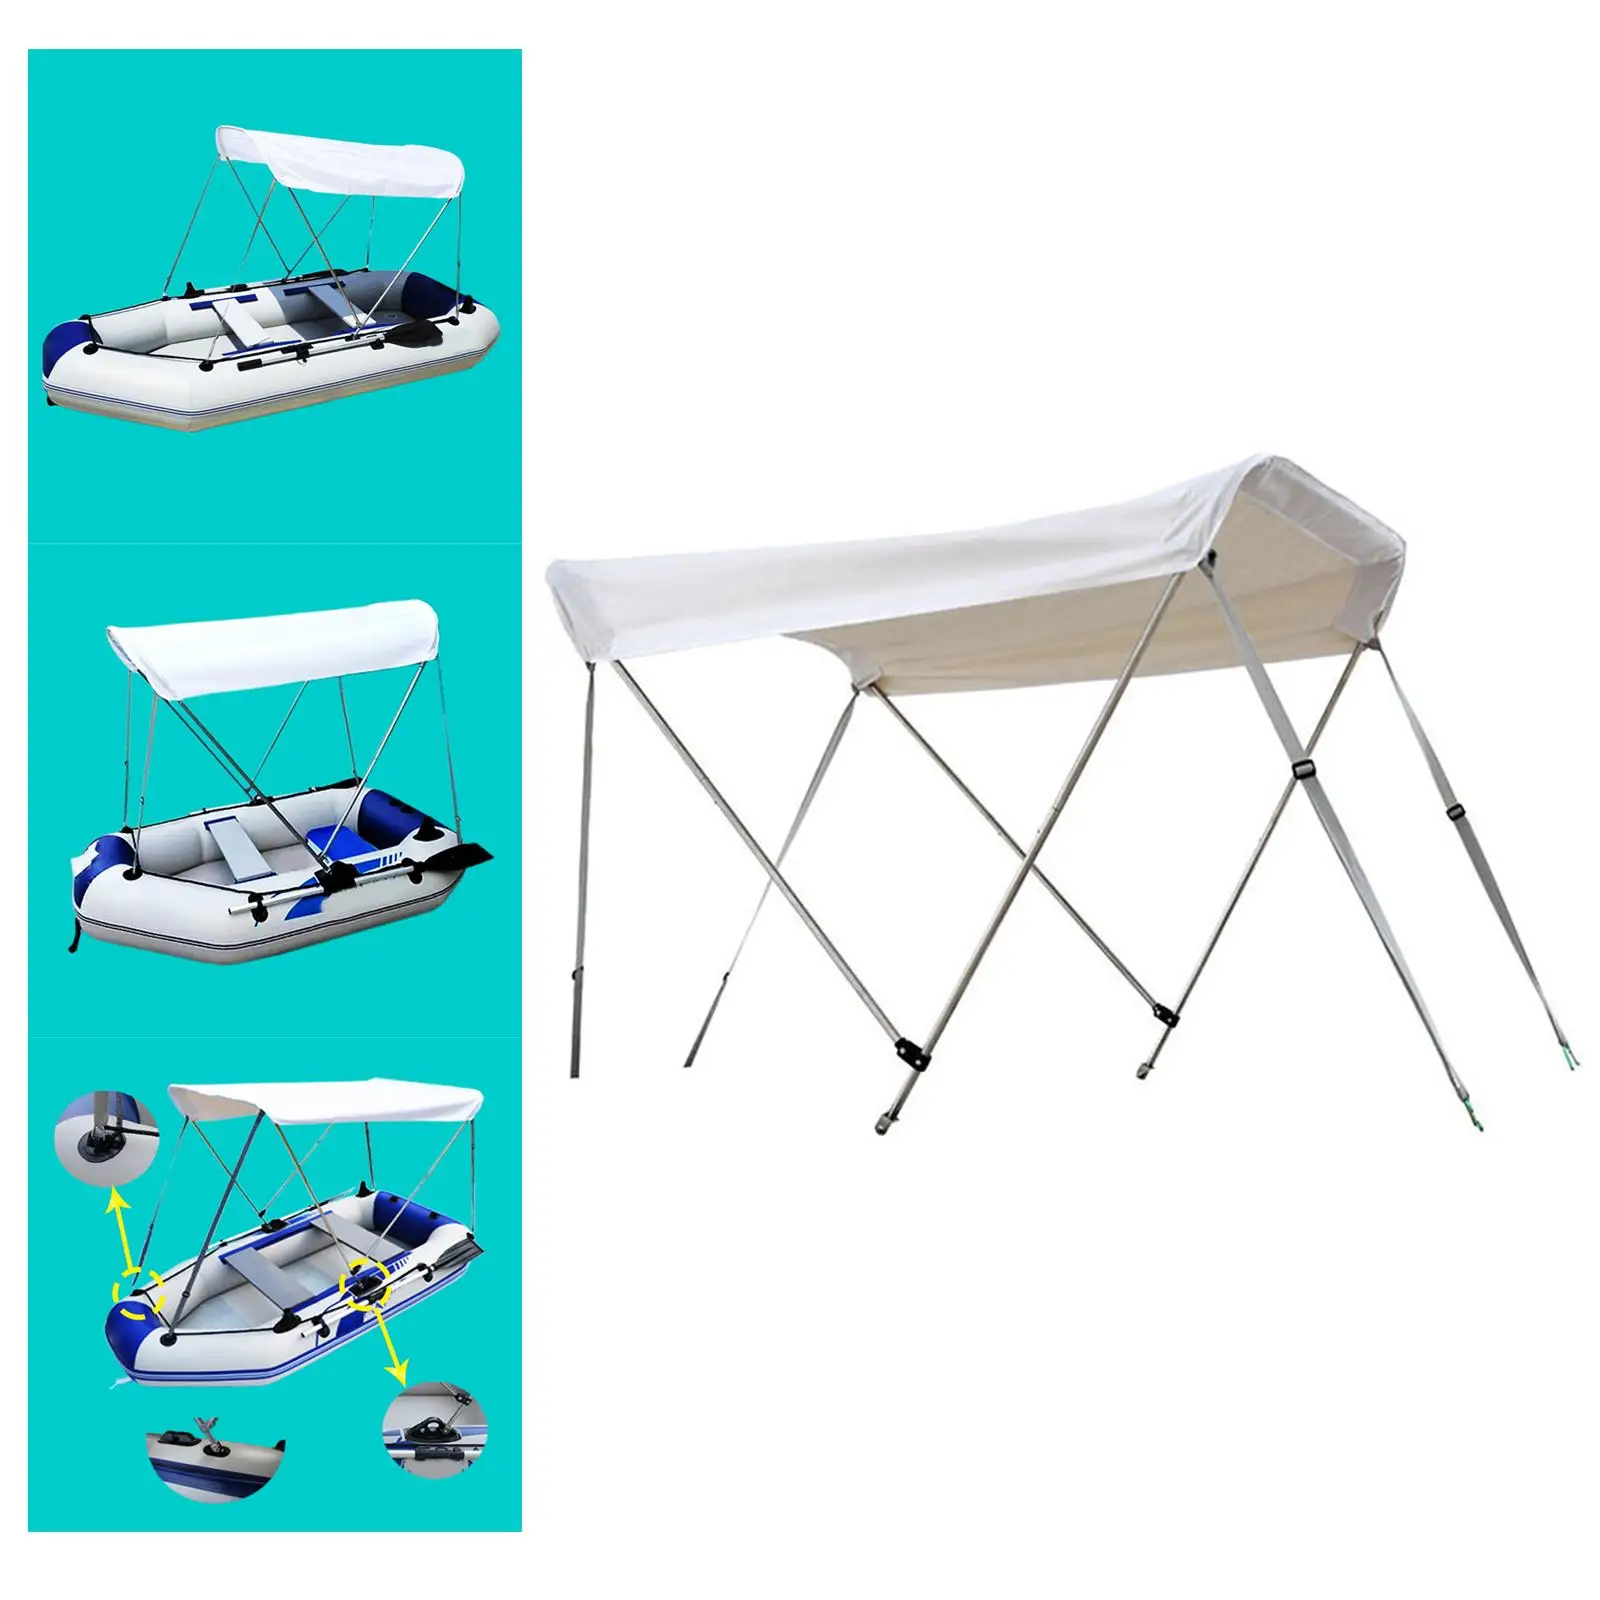 https://ae01.alicdn.com/kf/S7730d6814fcb4539924d1856fa212ff8H/Inflatable-Boat-Bimini-Fishing-Boat-Sun-Shade-Canopy-Sunshade-Awning-with-Adjustable-Straps-Poles.jpg